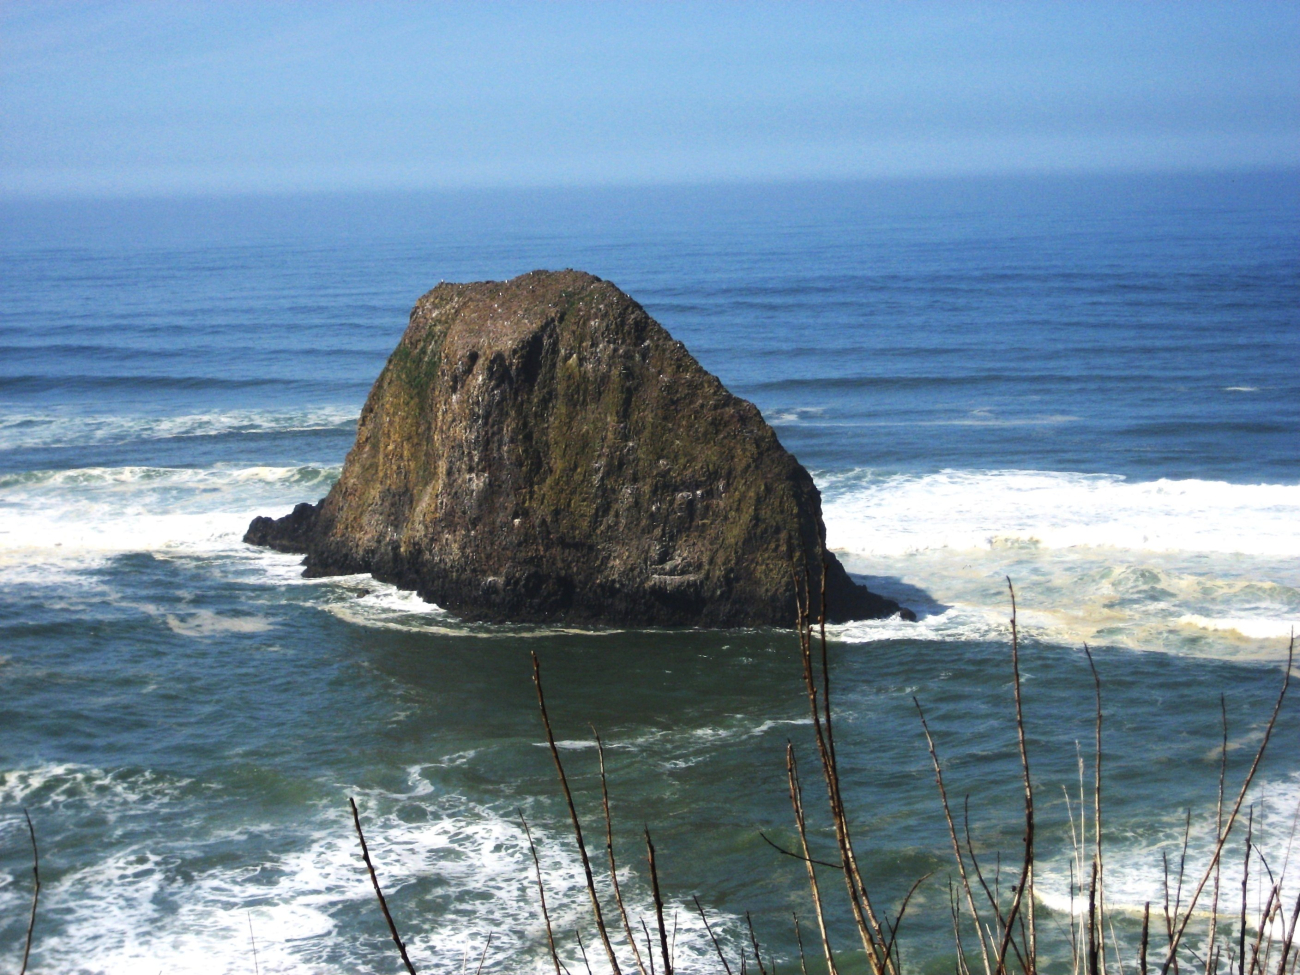 Sea stacks and never-ending surf characterize the Oregon coast